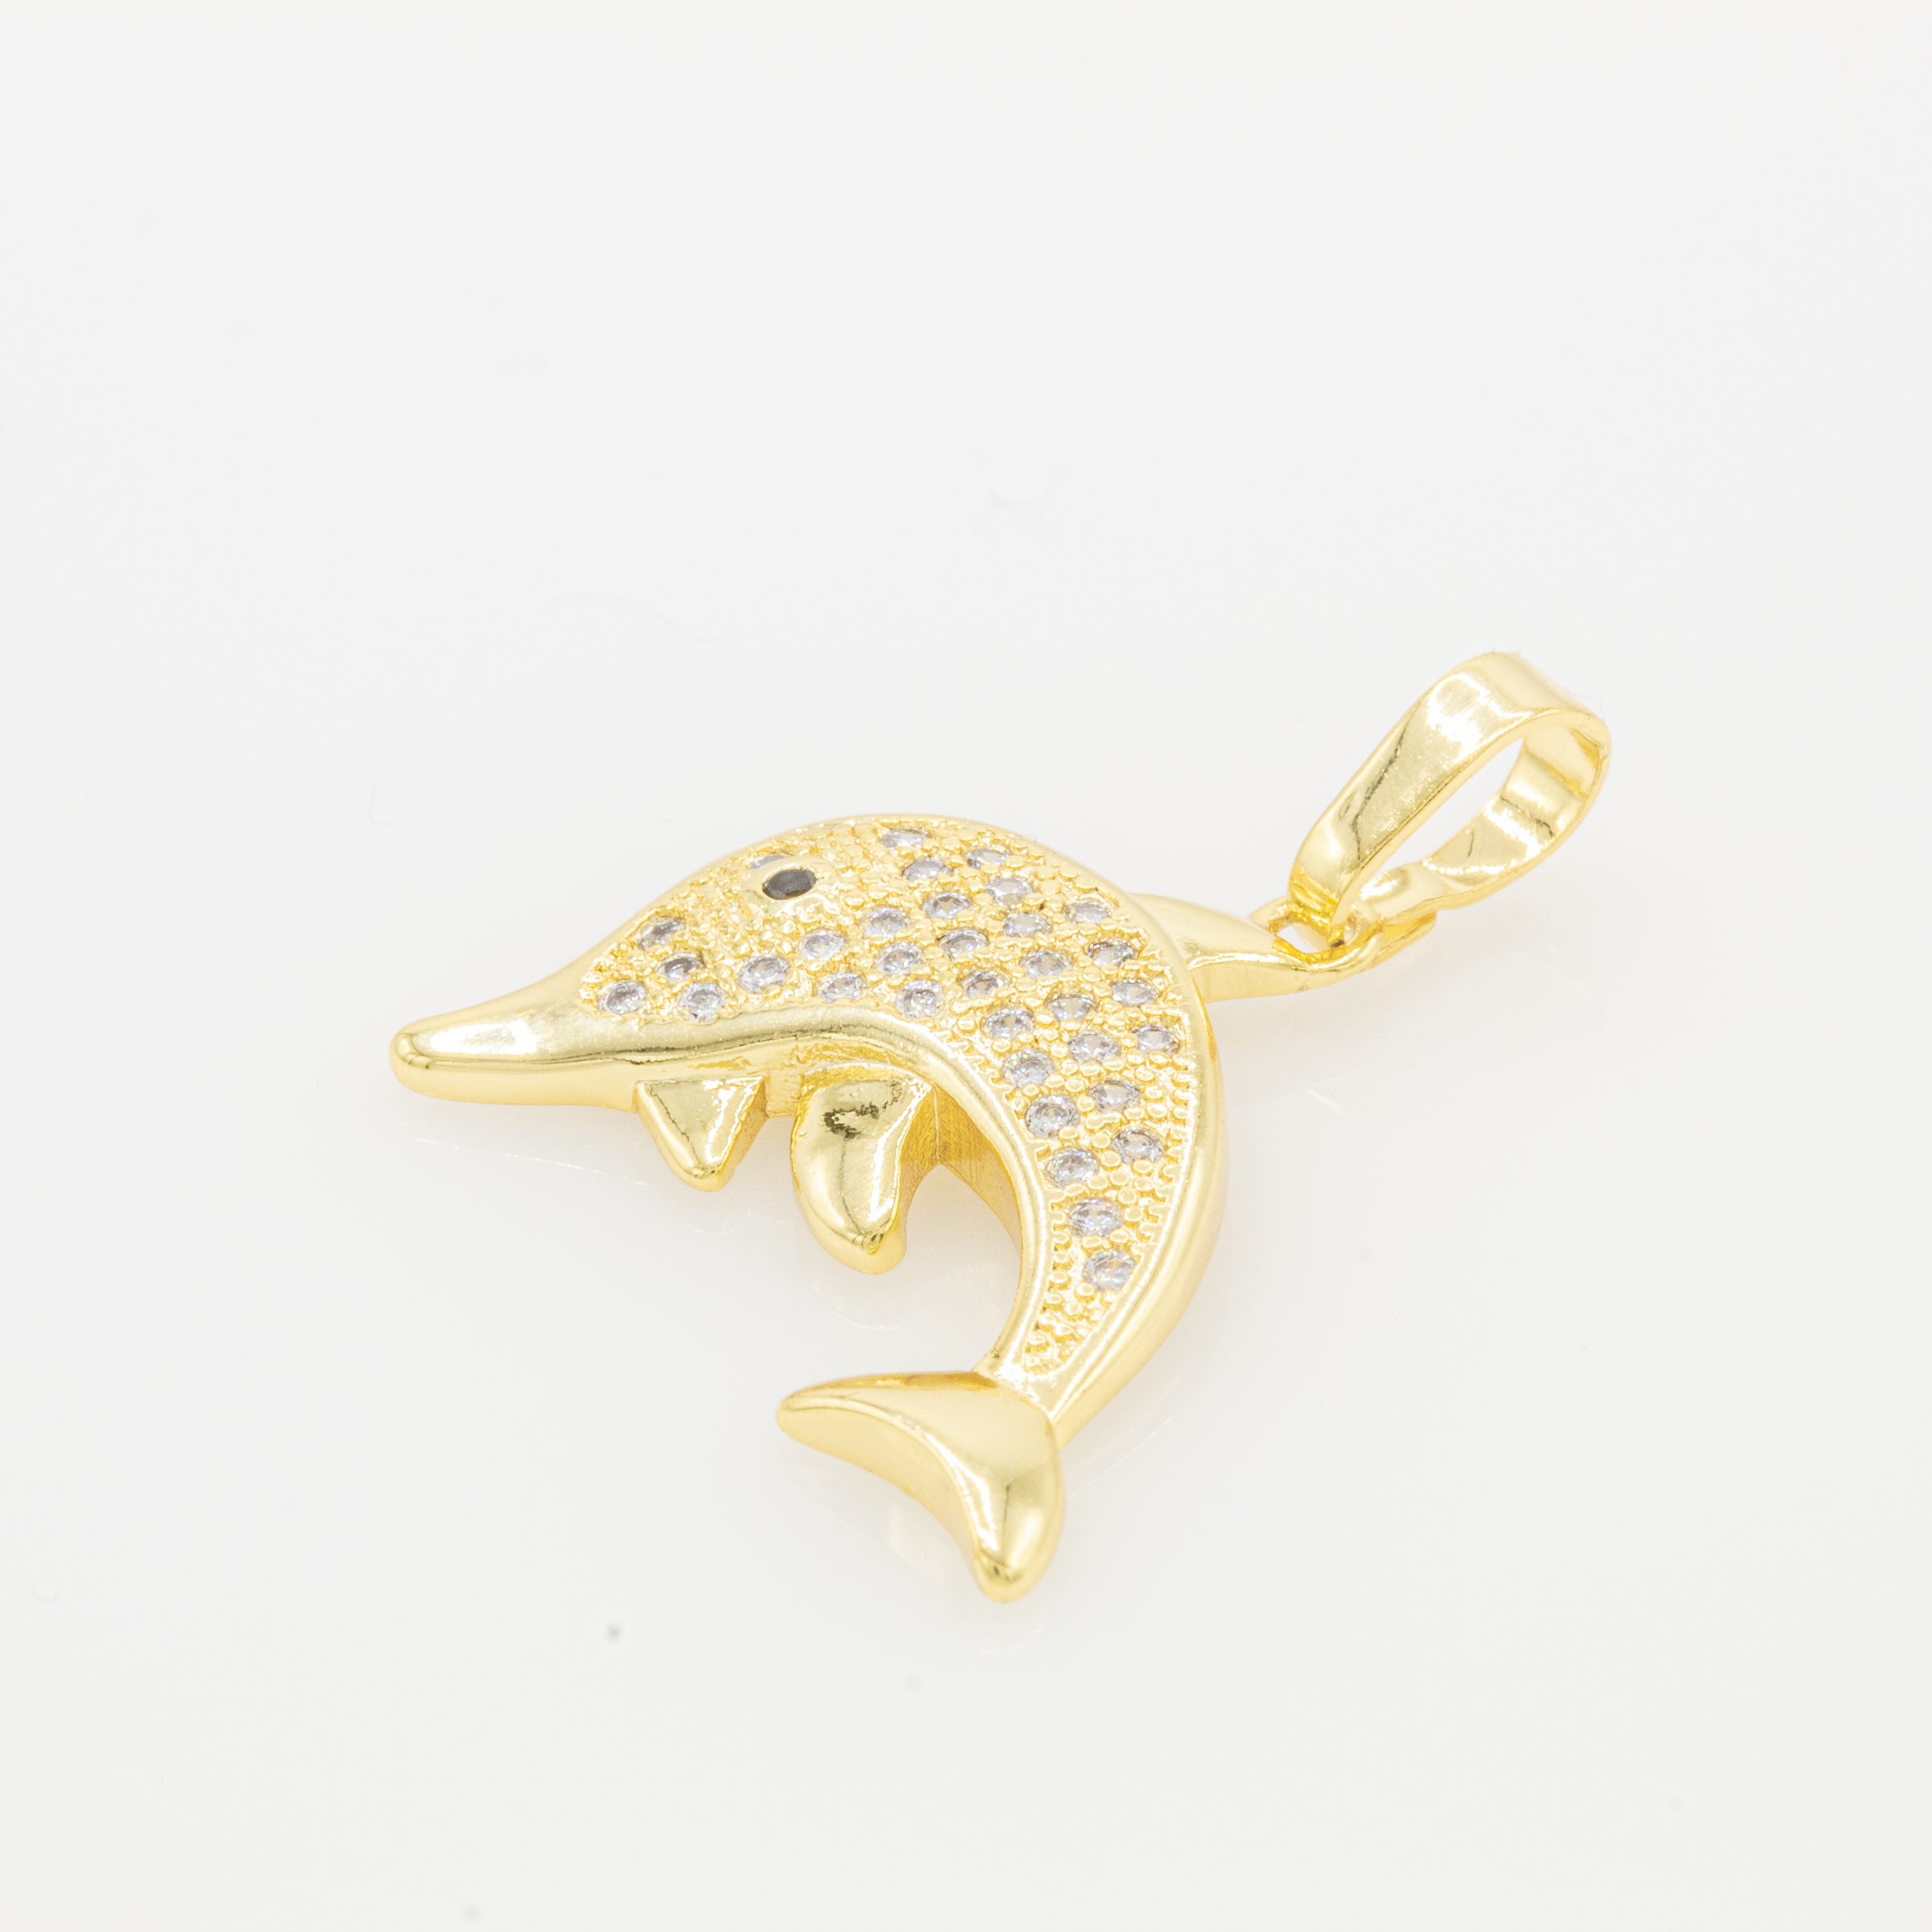 Dolphin Cubic Zirconia Pendant 14K Gold Filled Women Fashion Jewelry